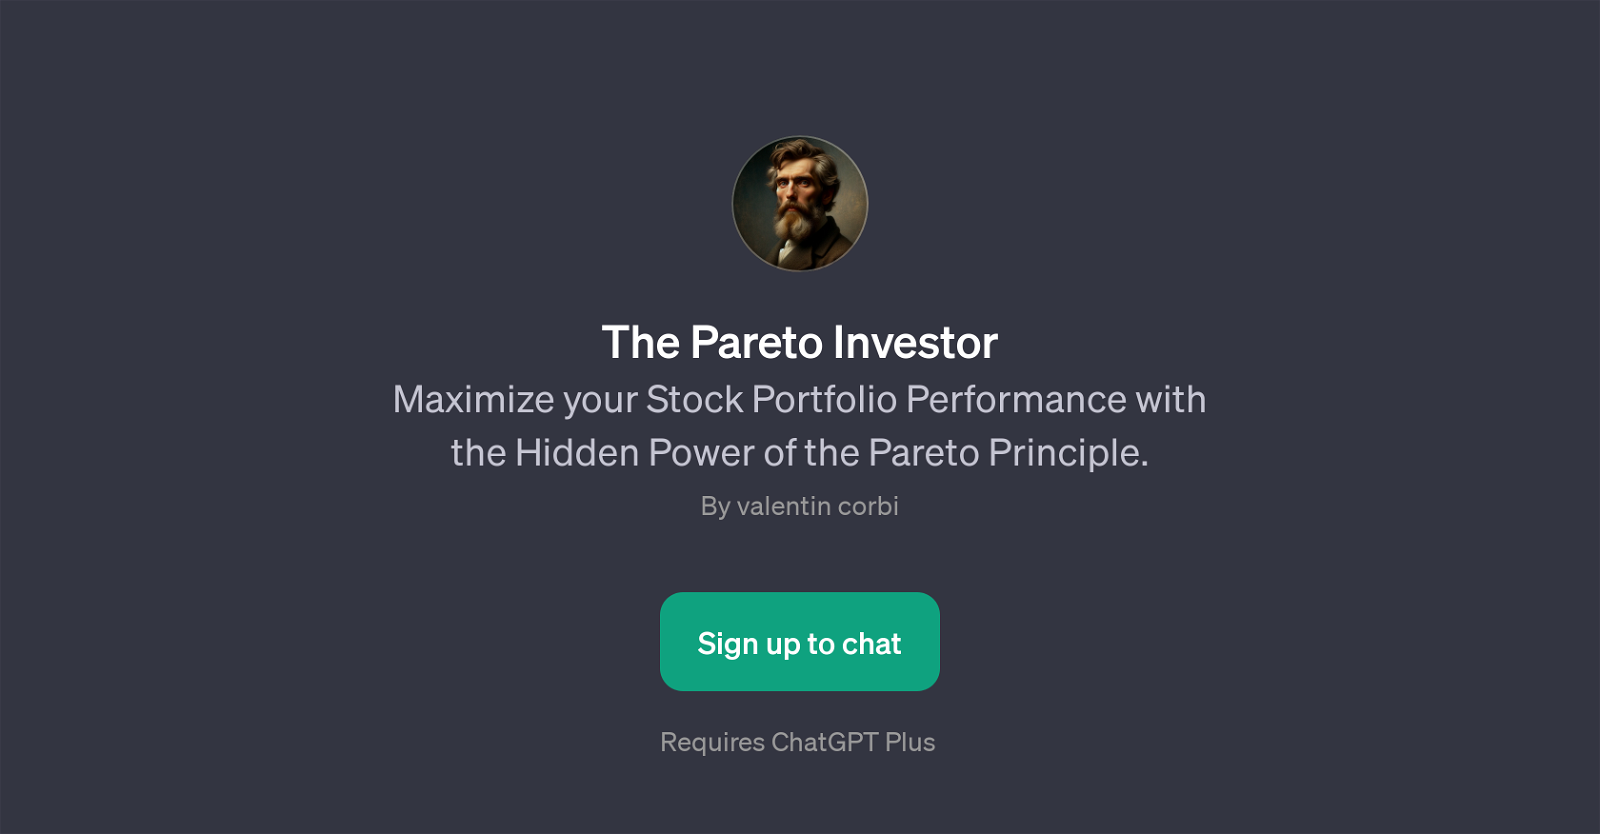 The Pareto Investor website